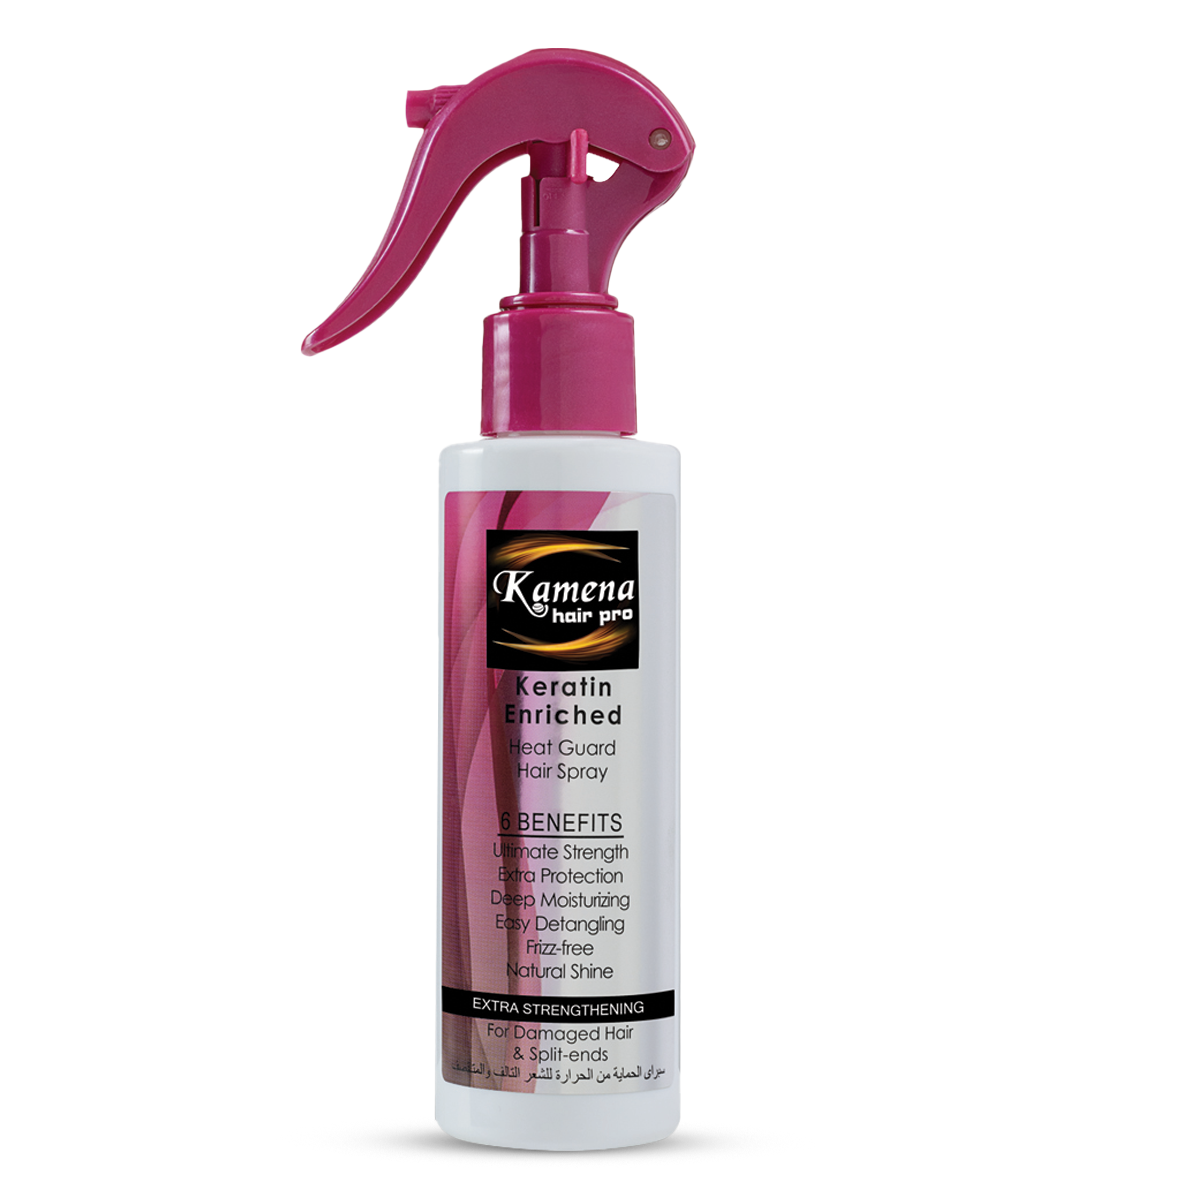   Kamena Hair Pro Keratin Enriched Heat Guard Hair Spray - 150 ml Bottle